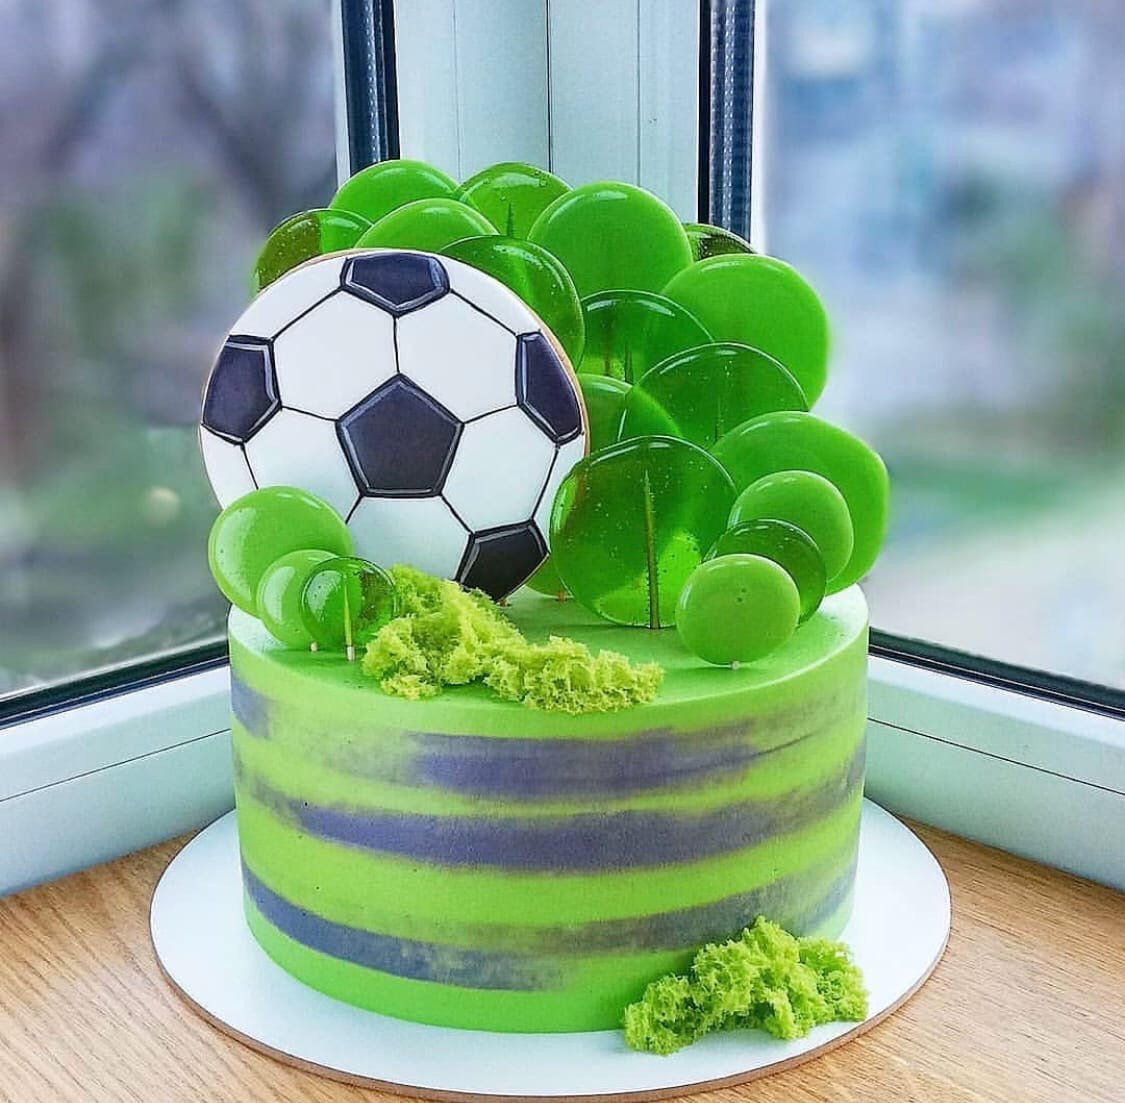 Торт футбол